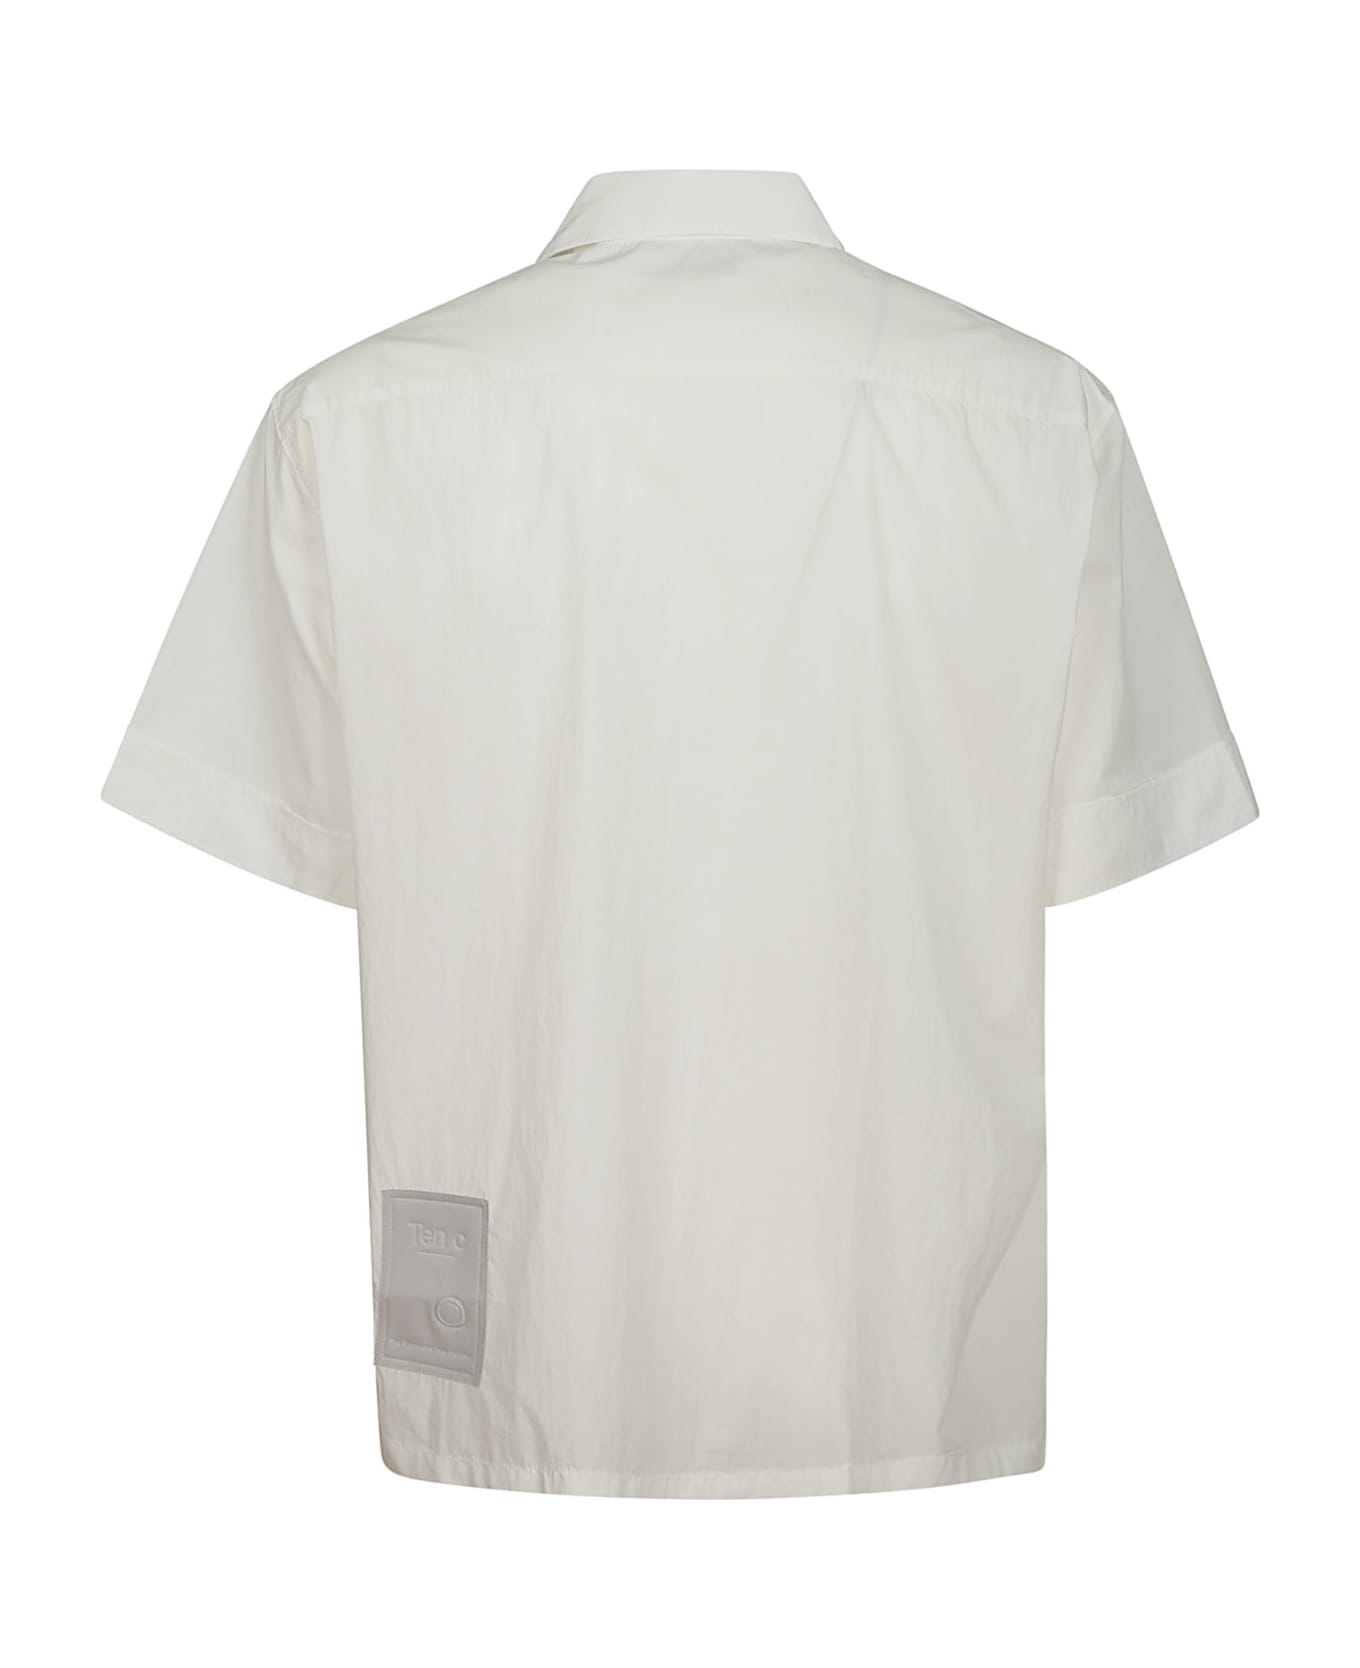 Ten C Ss Shirt - White